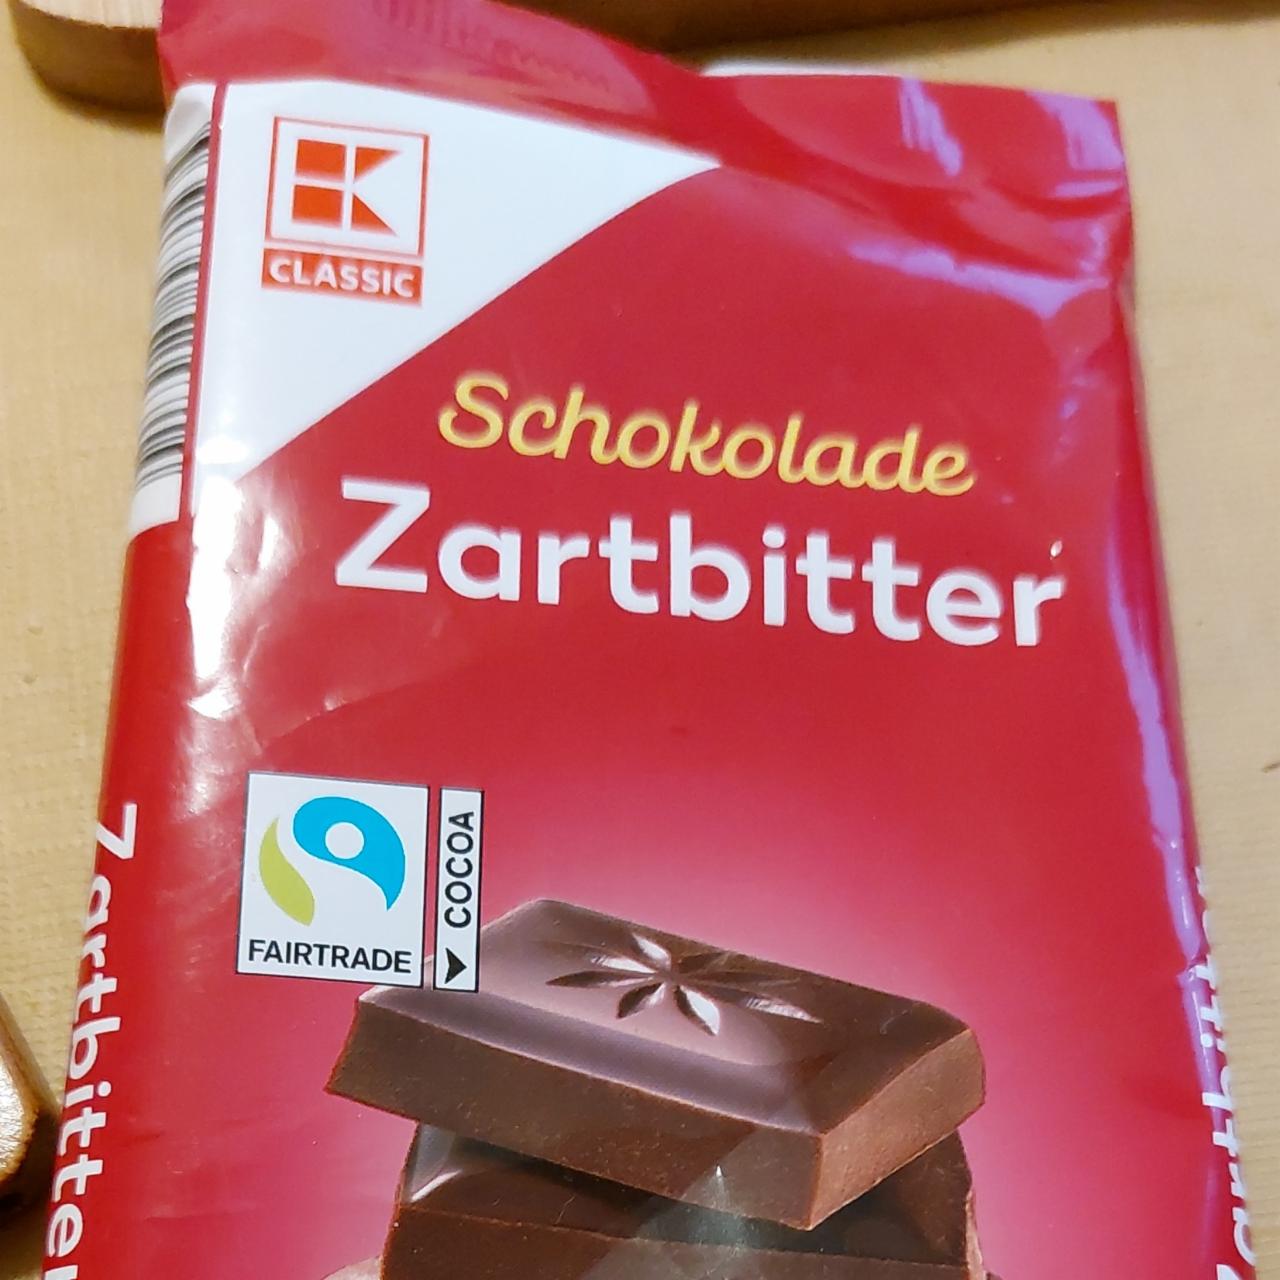 Fotografie - Herbe Zartbitter Schokolade 50% K-Classic